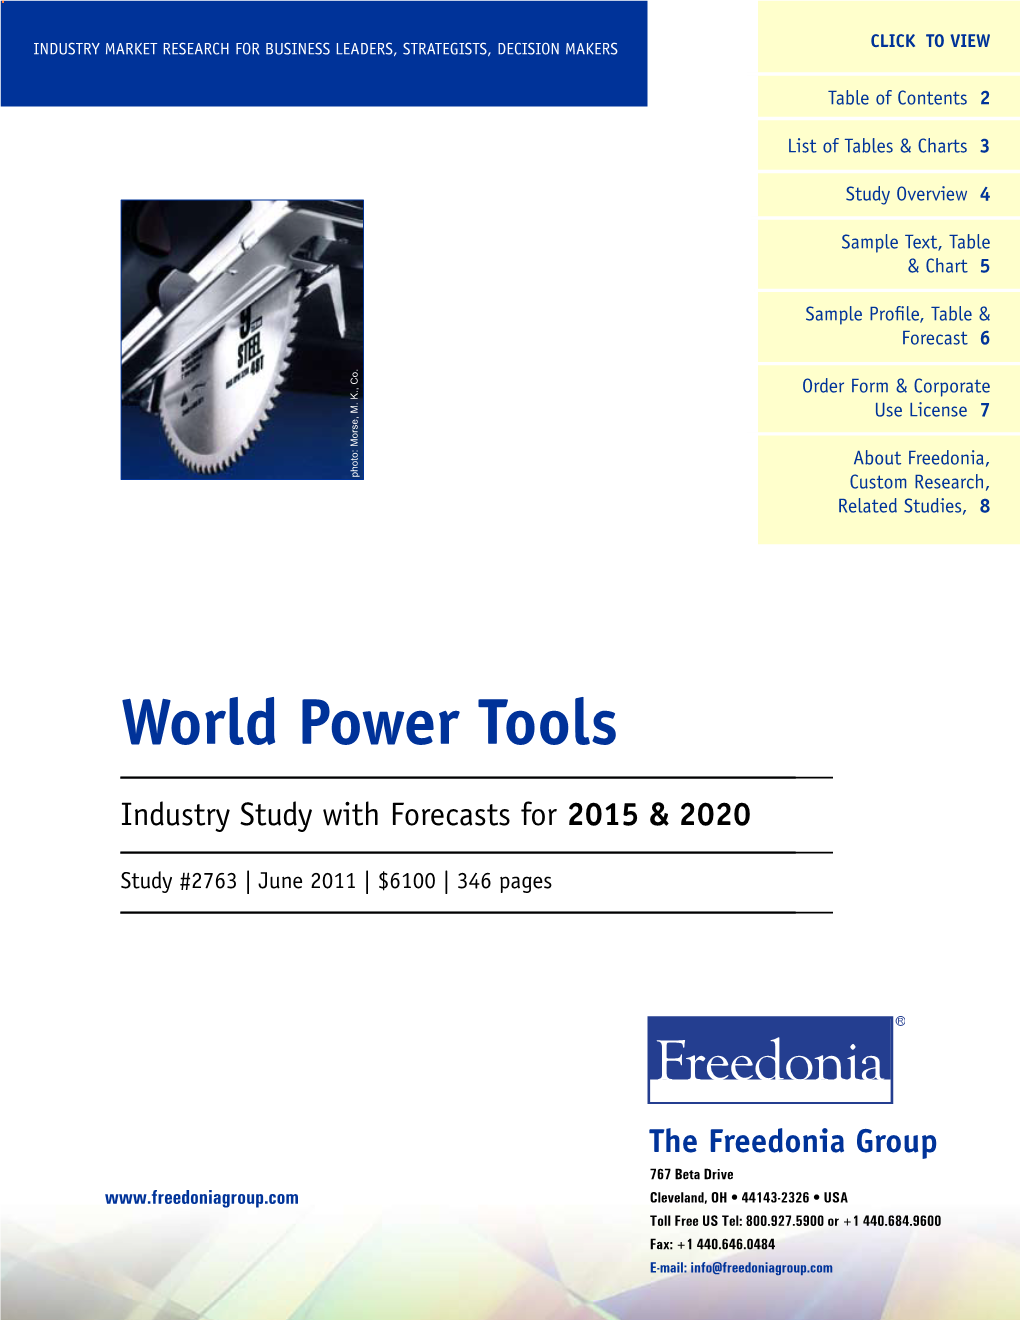 World Power Tools